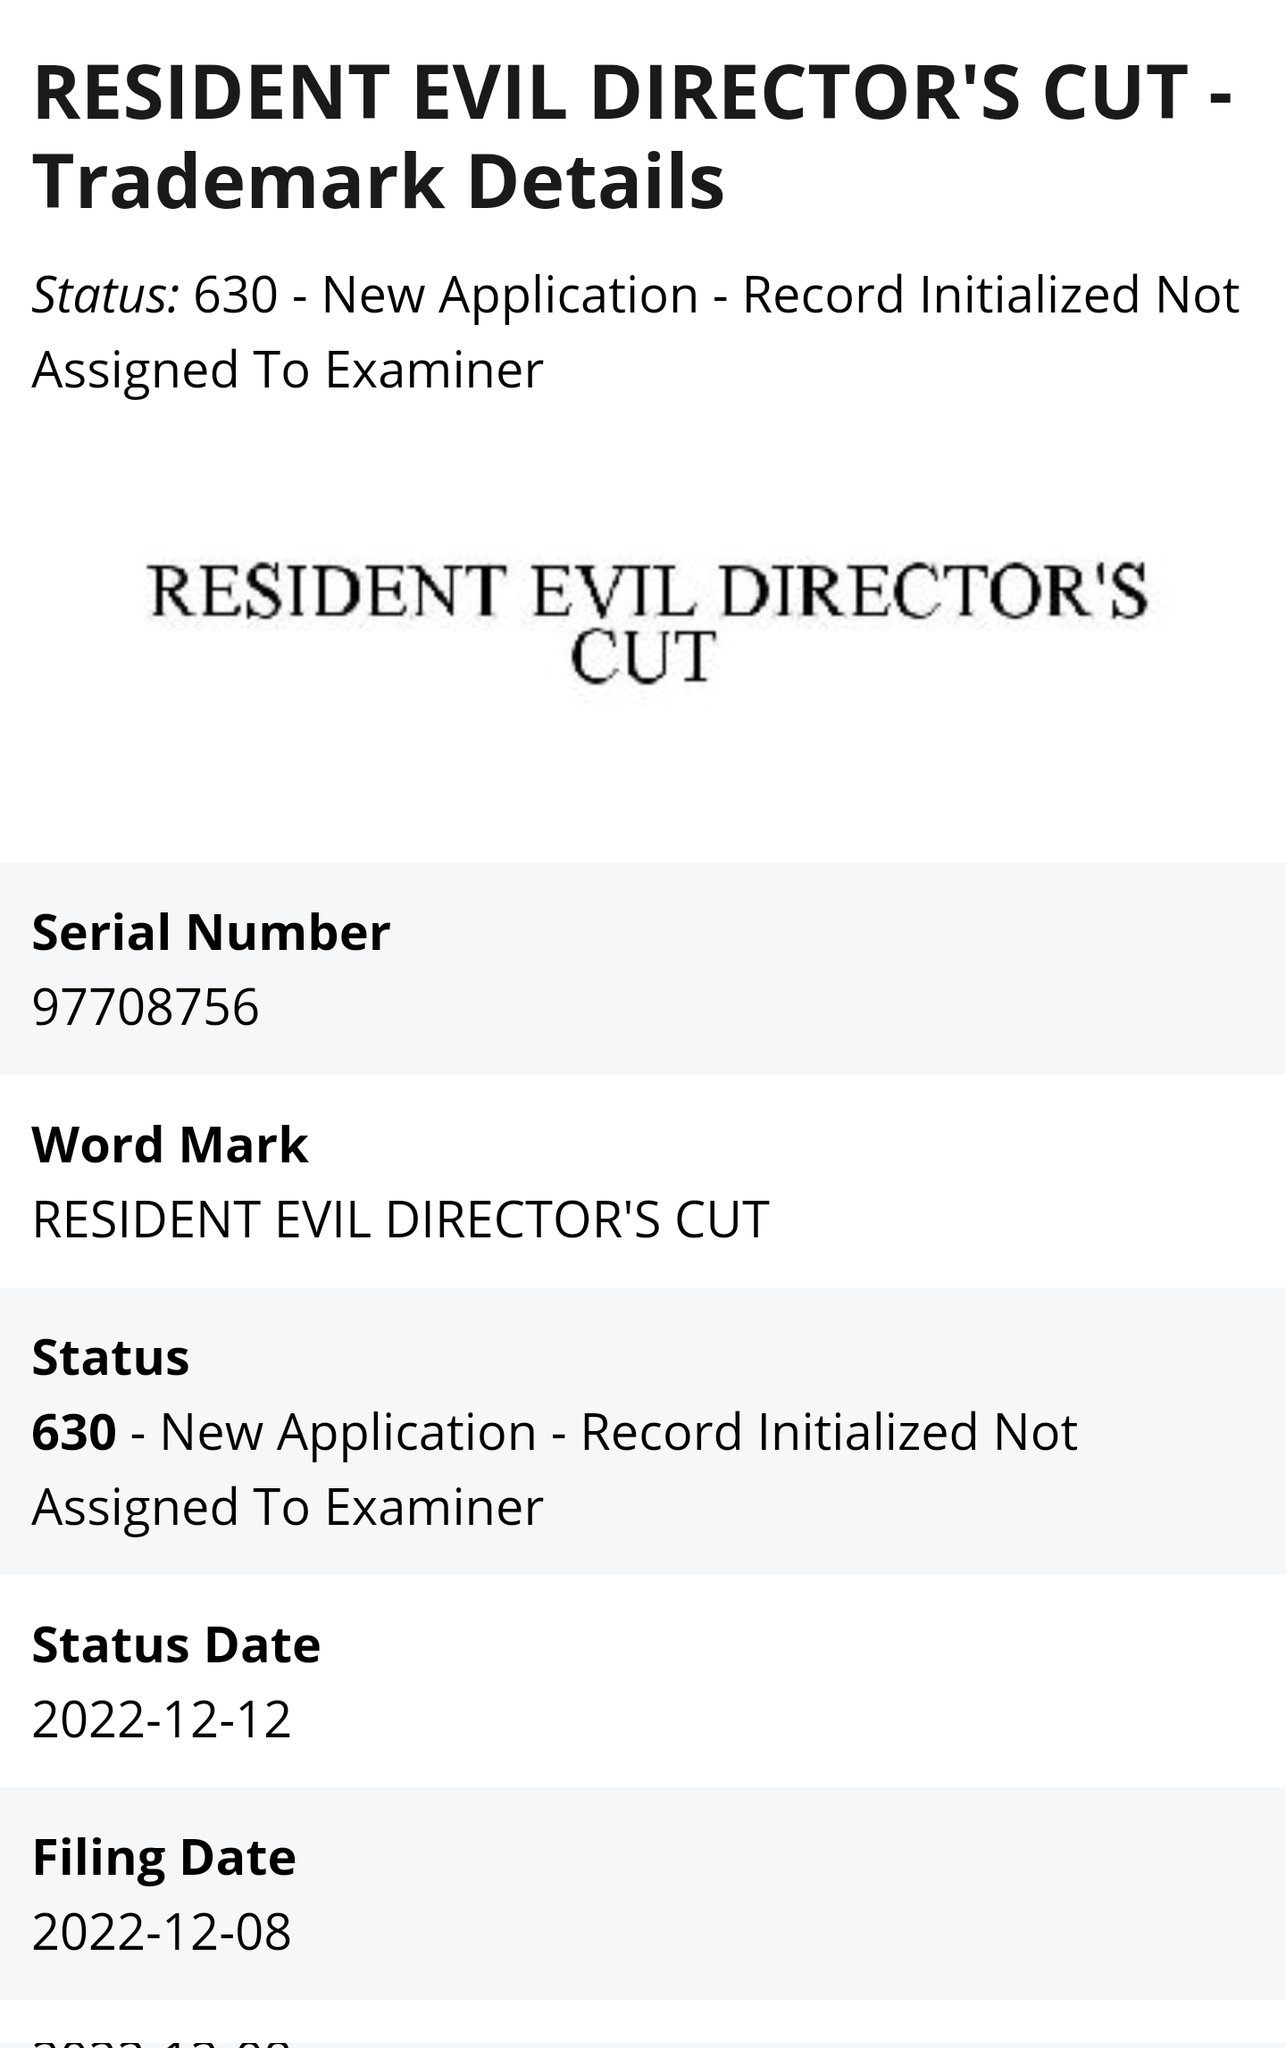 Trademark application for Resident Evil Director's Cut